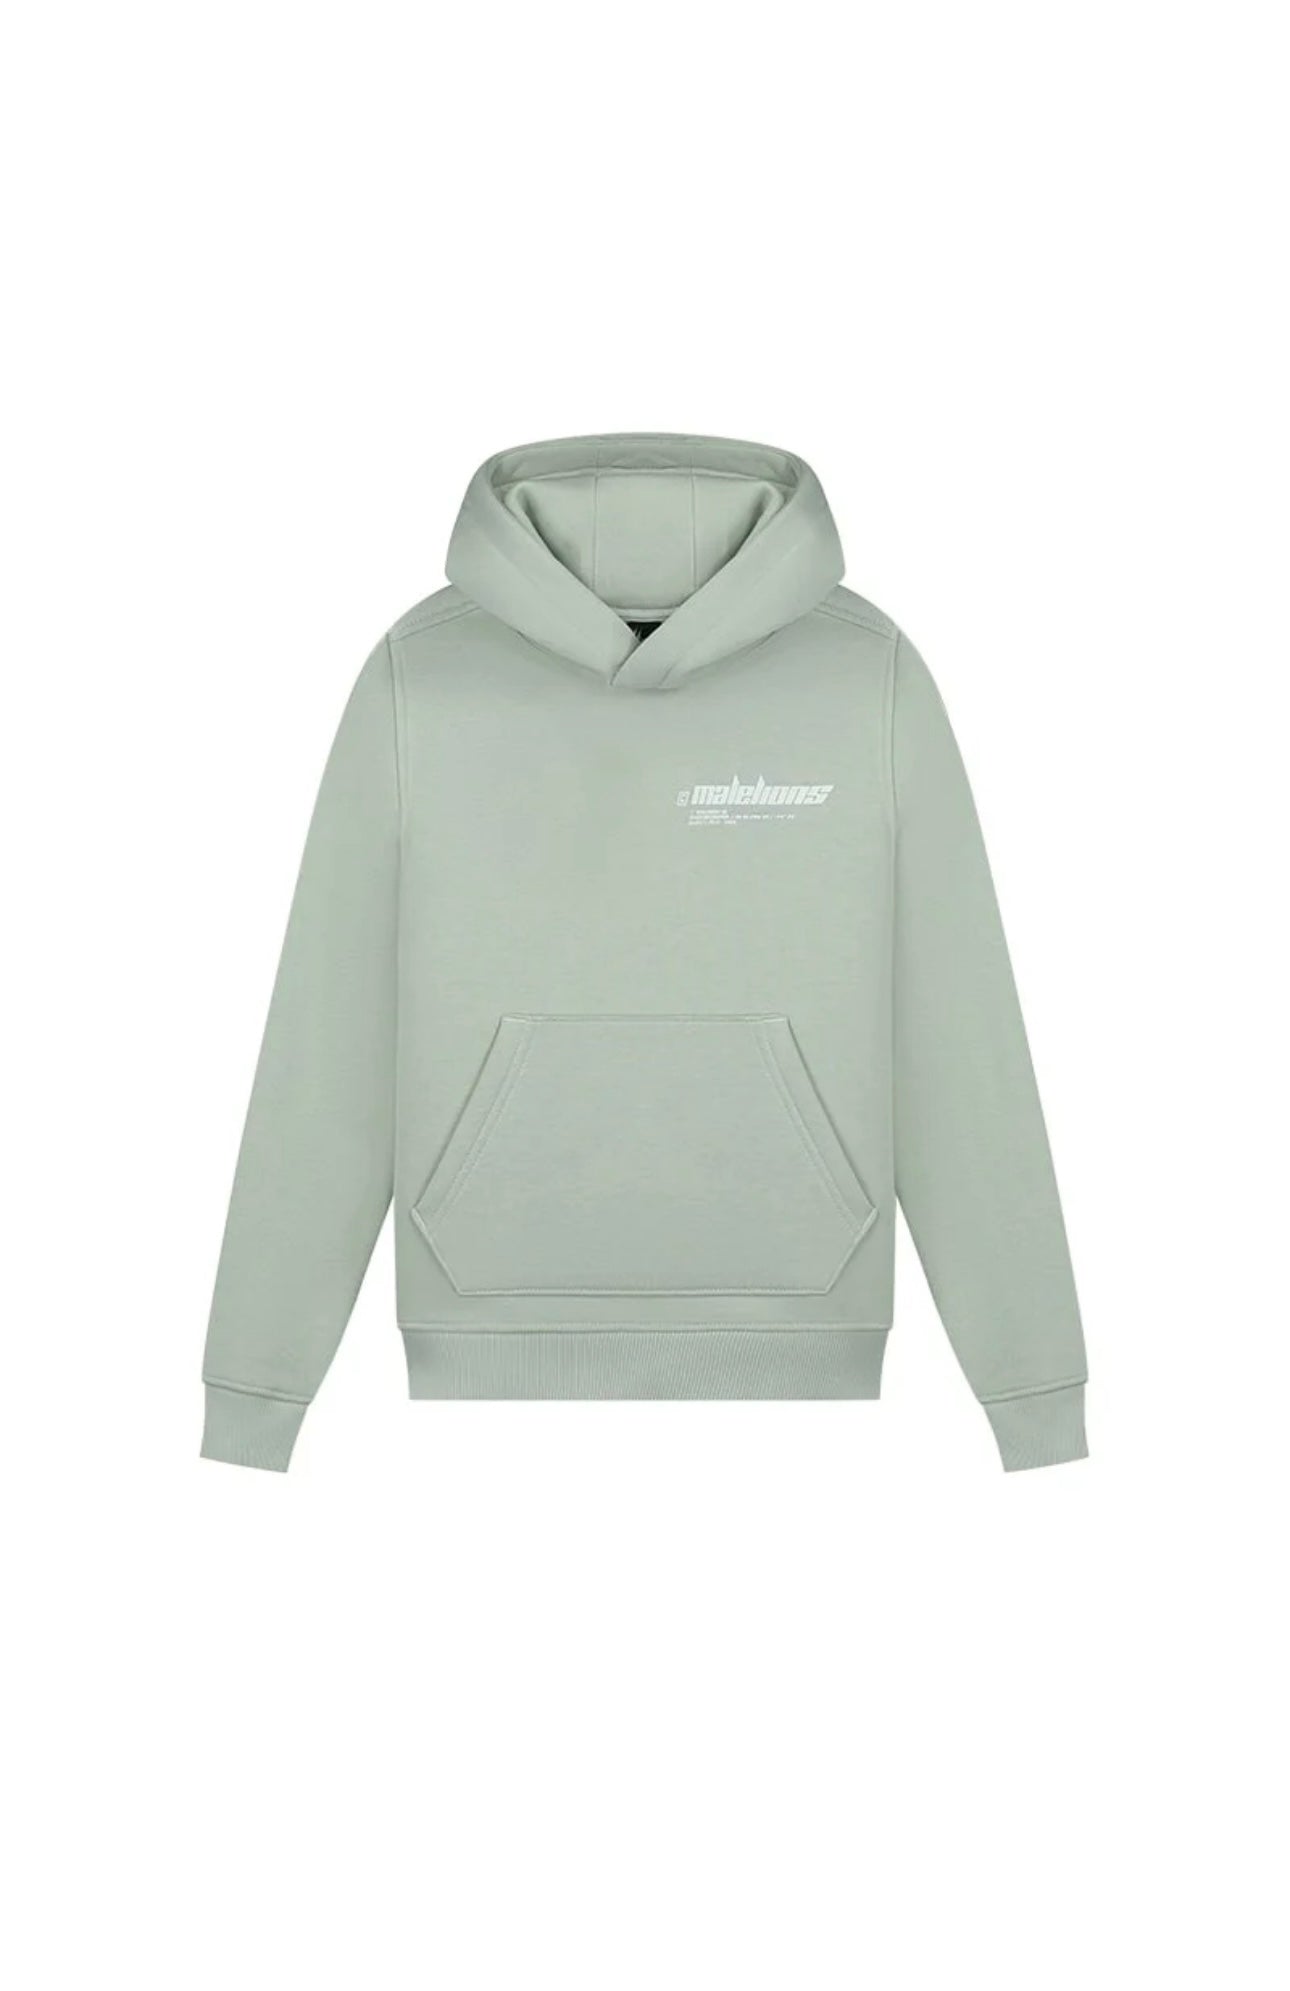 Malelions junior worldwide hoodie - aqua grey